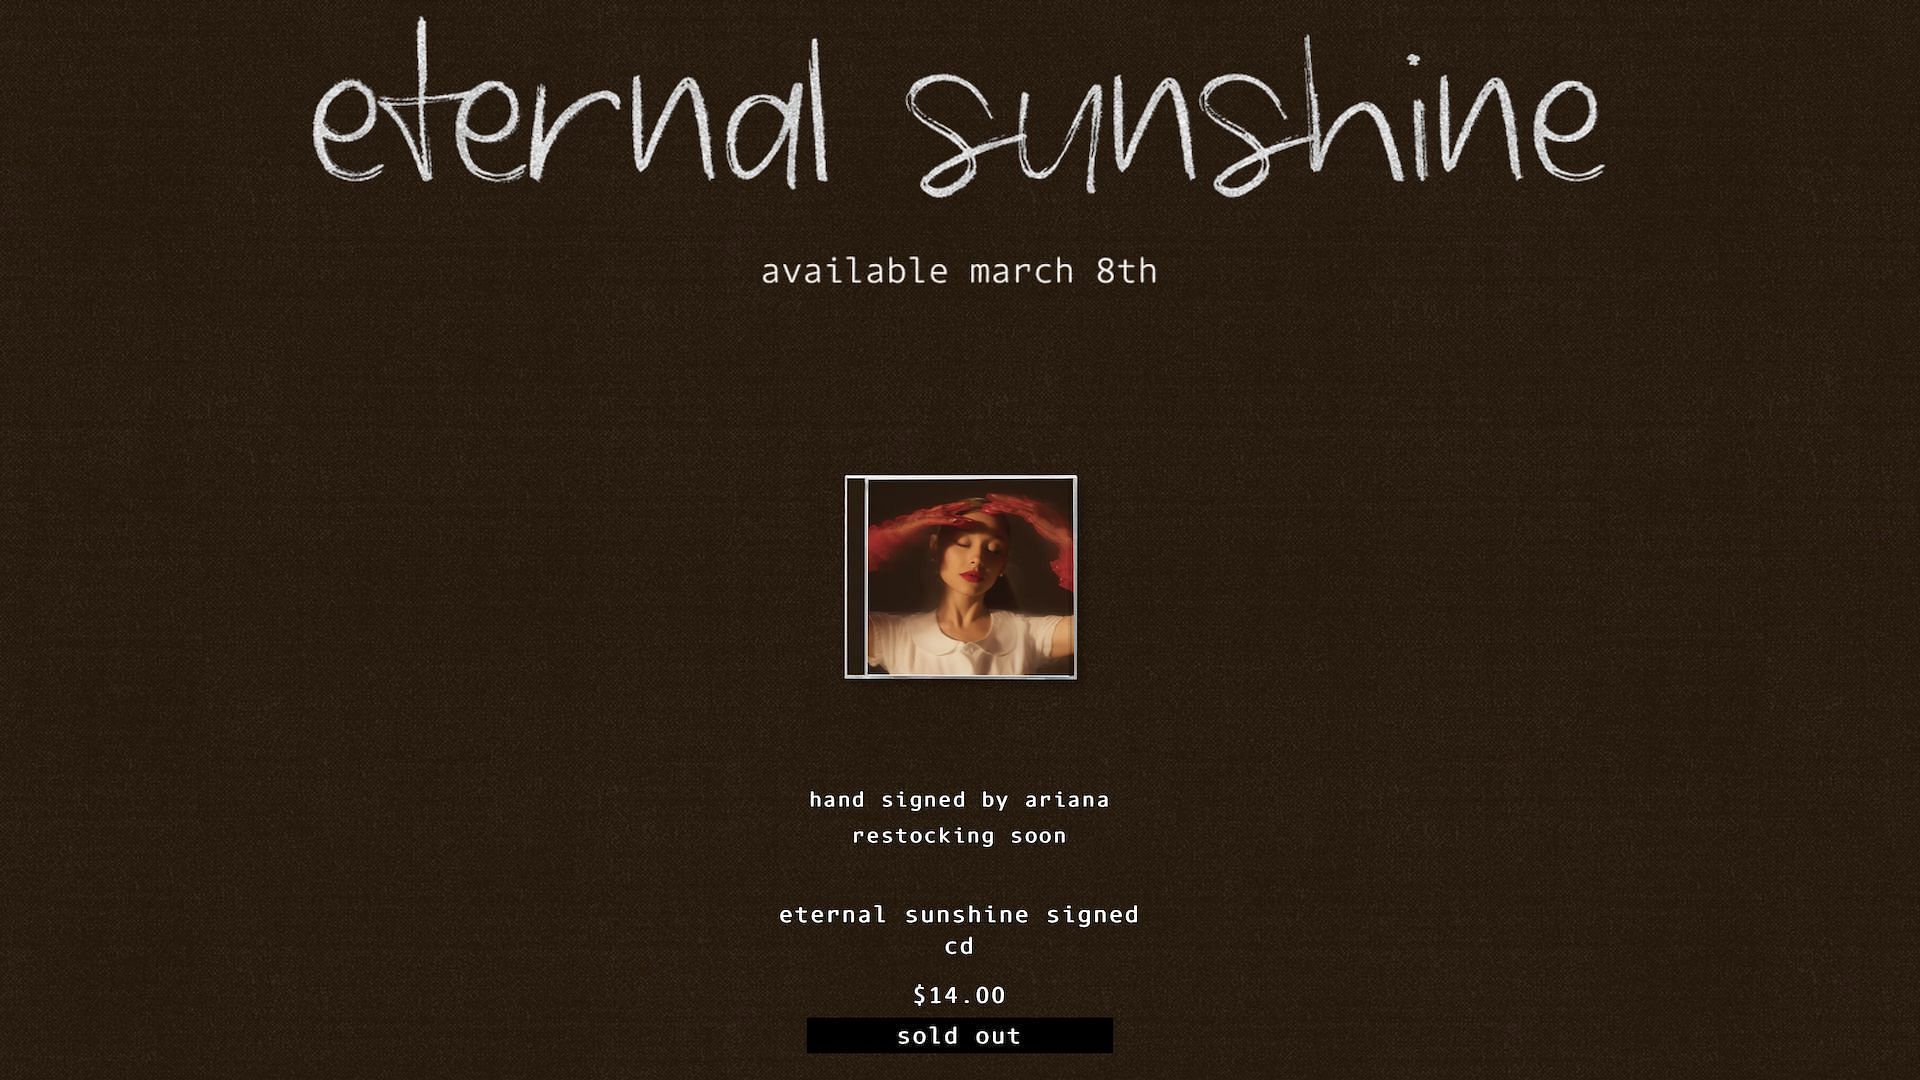 Eternal Sunshine Signed CD – Ariana Grande